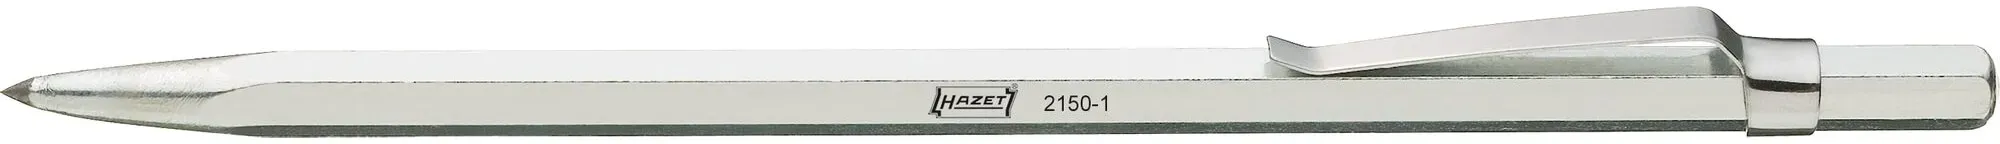 HAZET, Meissel, Reissnadel 2150-1